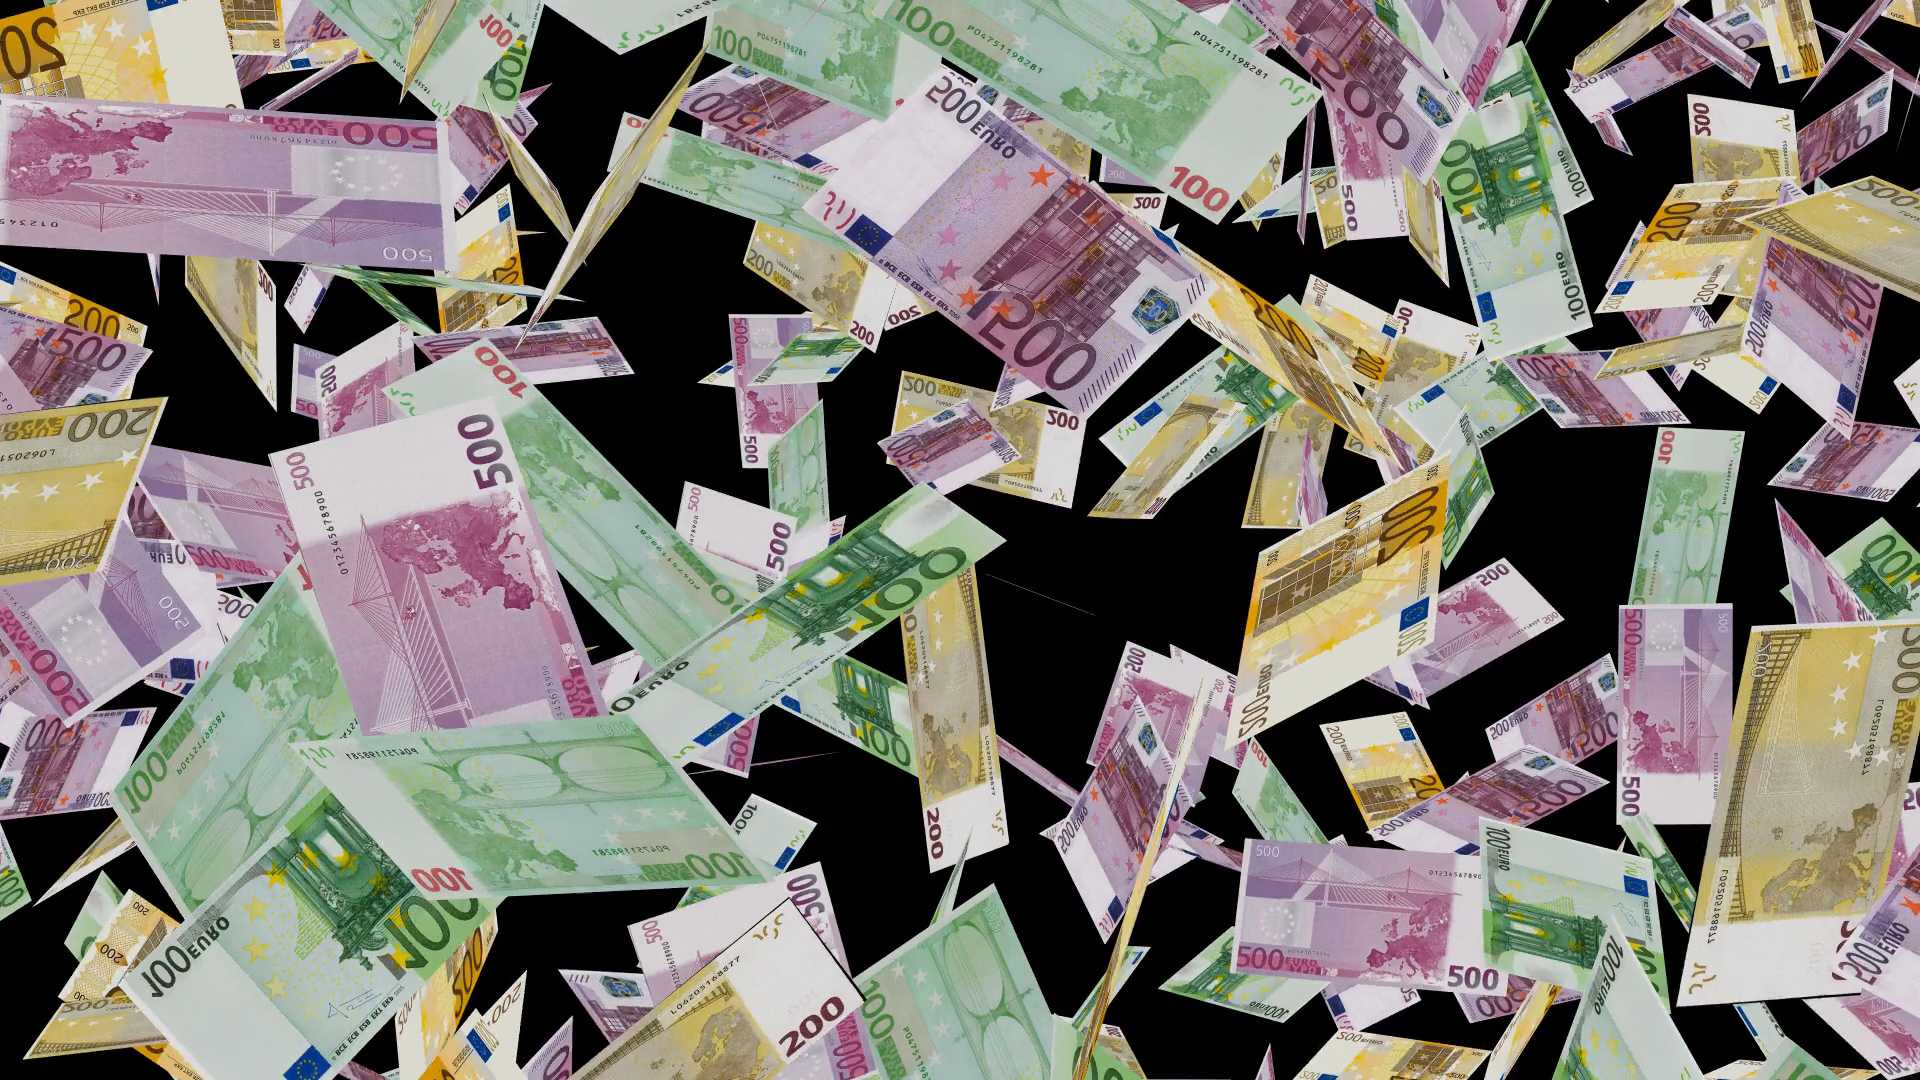 Billions of Euros bills raining